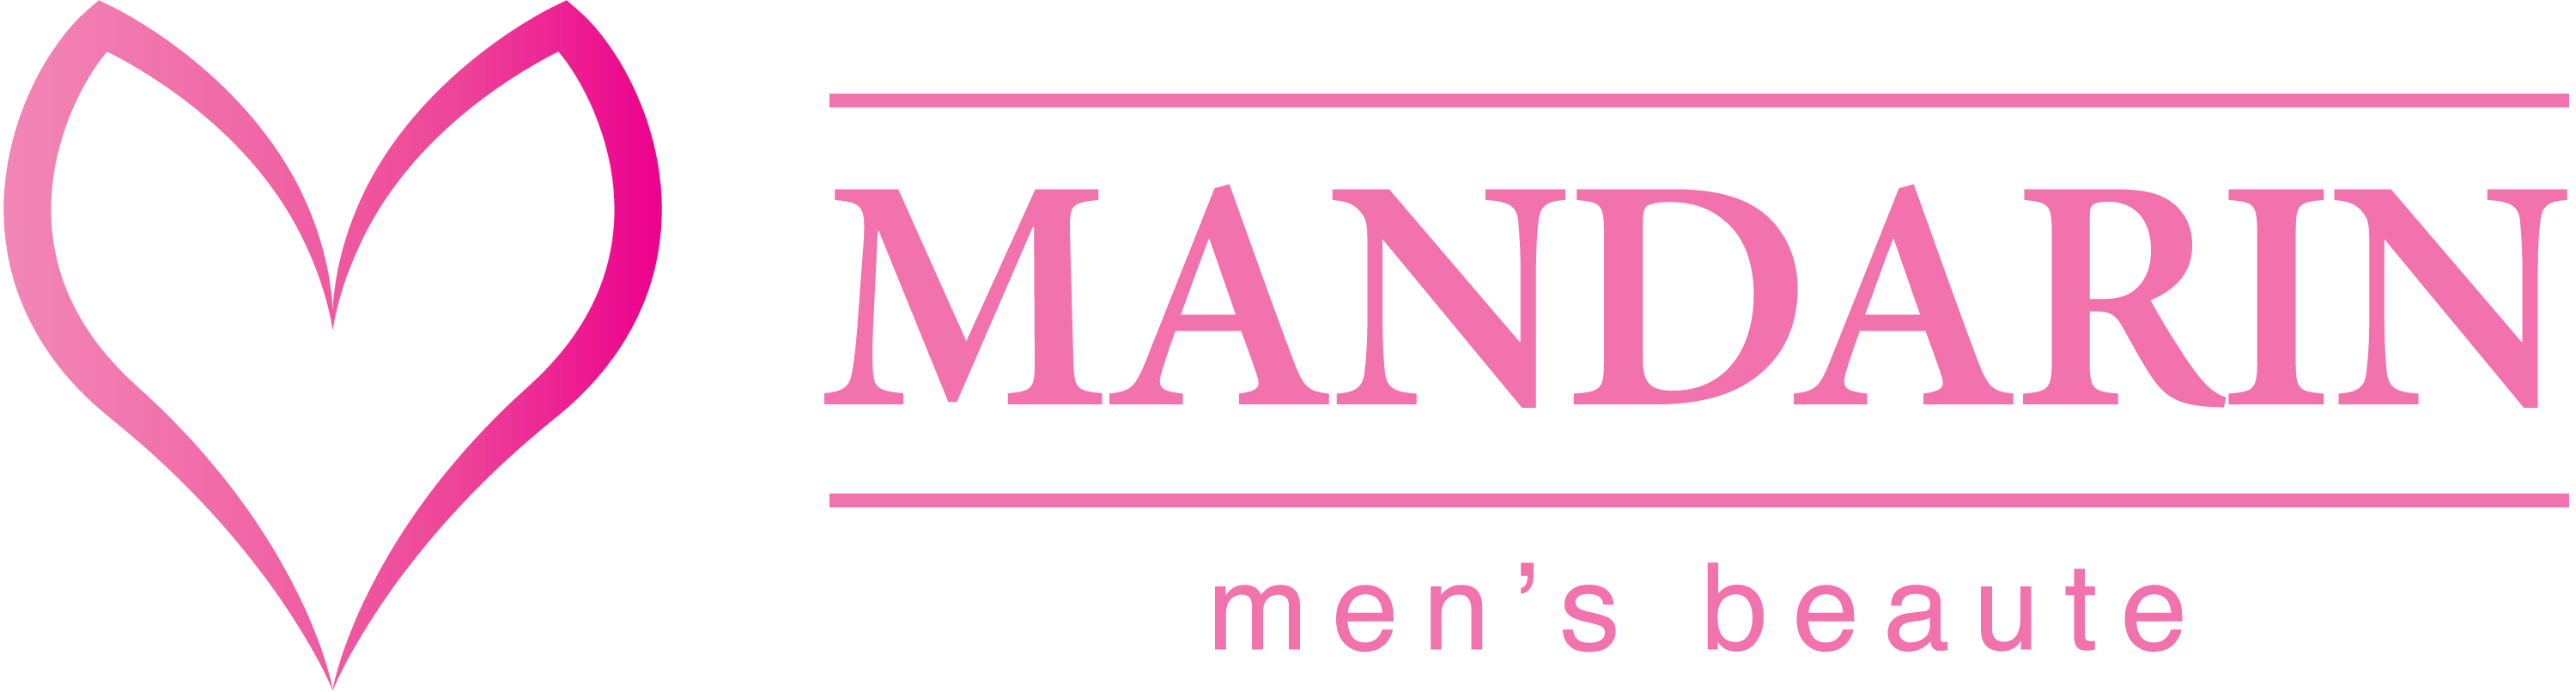 MANDARIN men's beaute